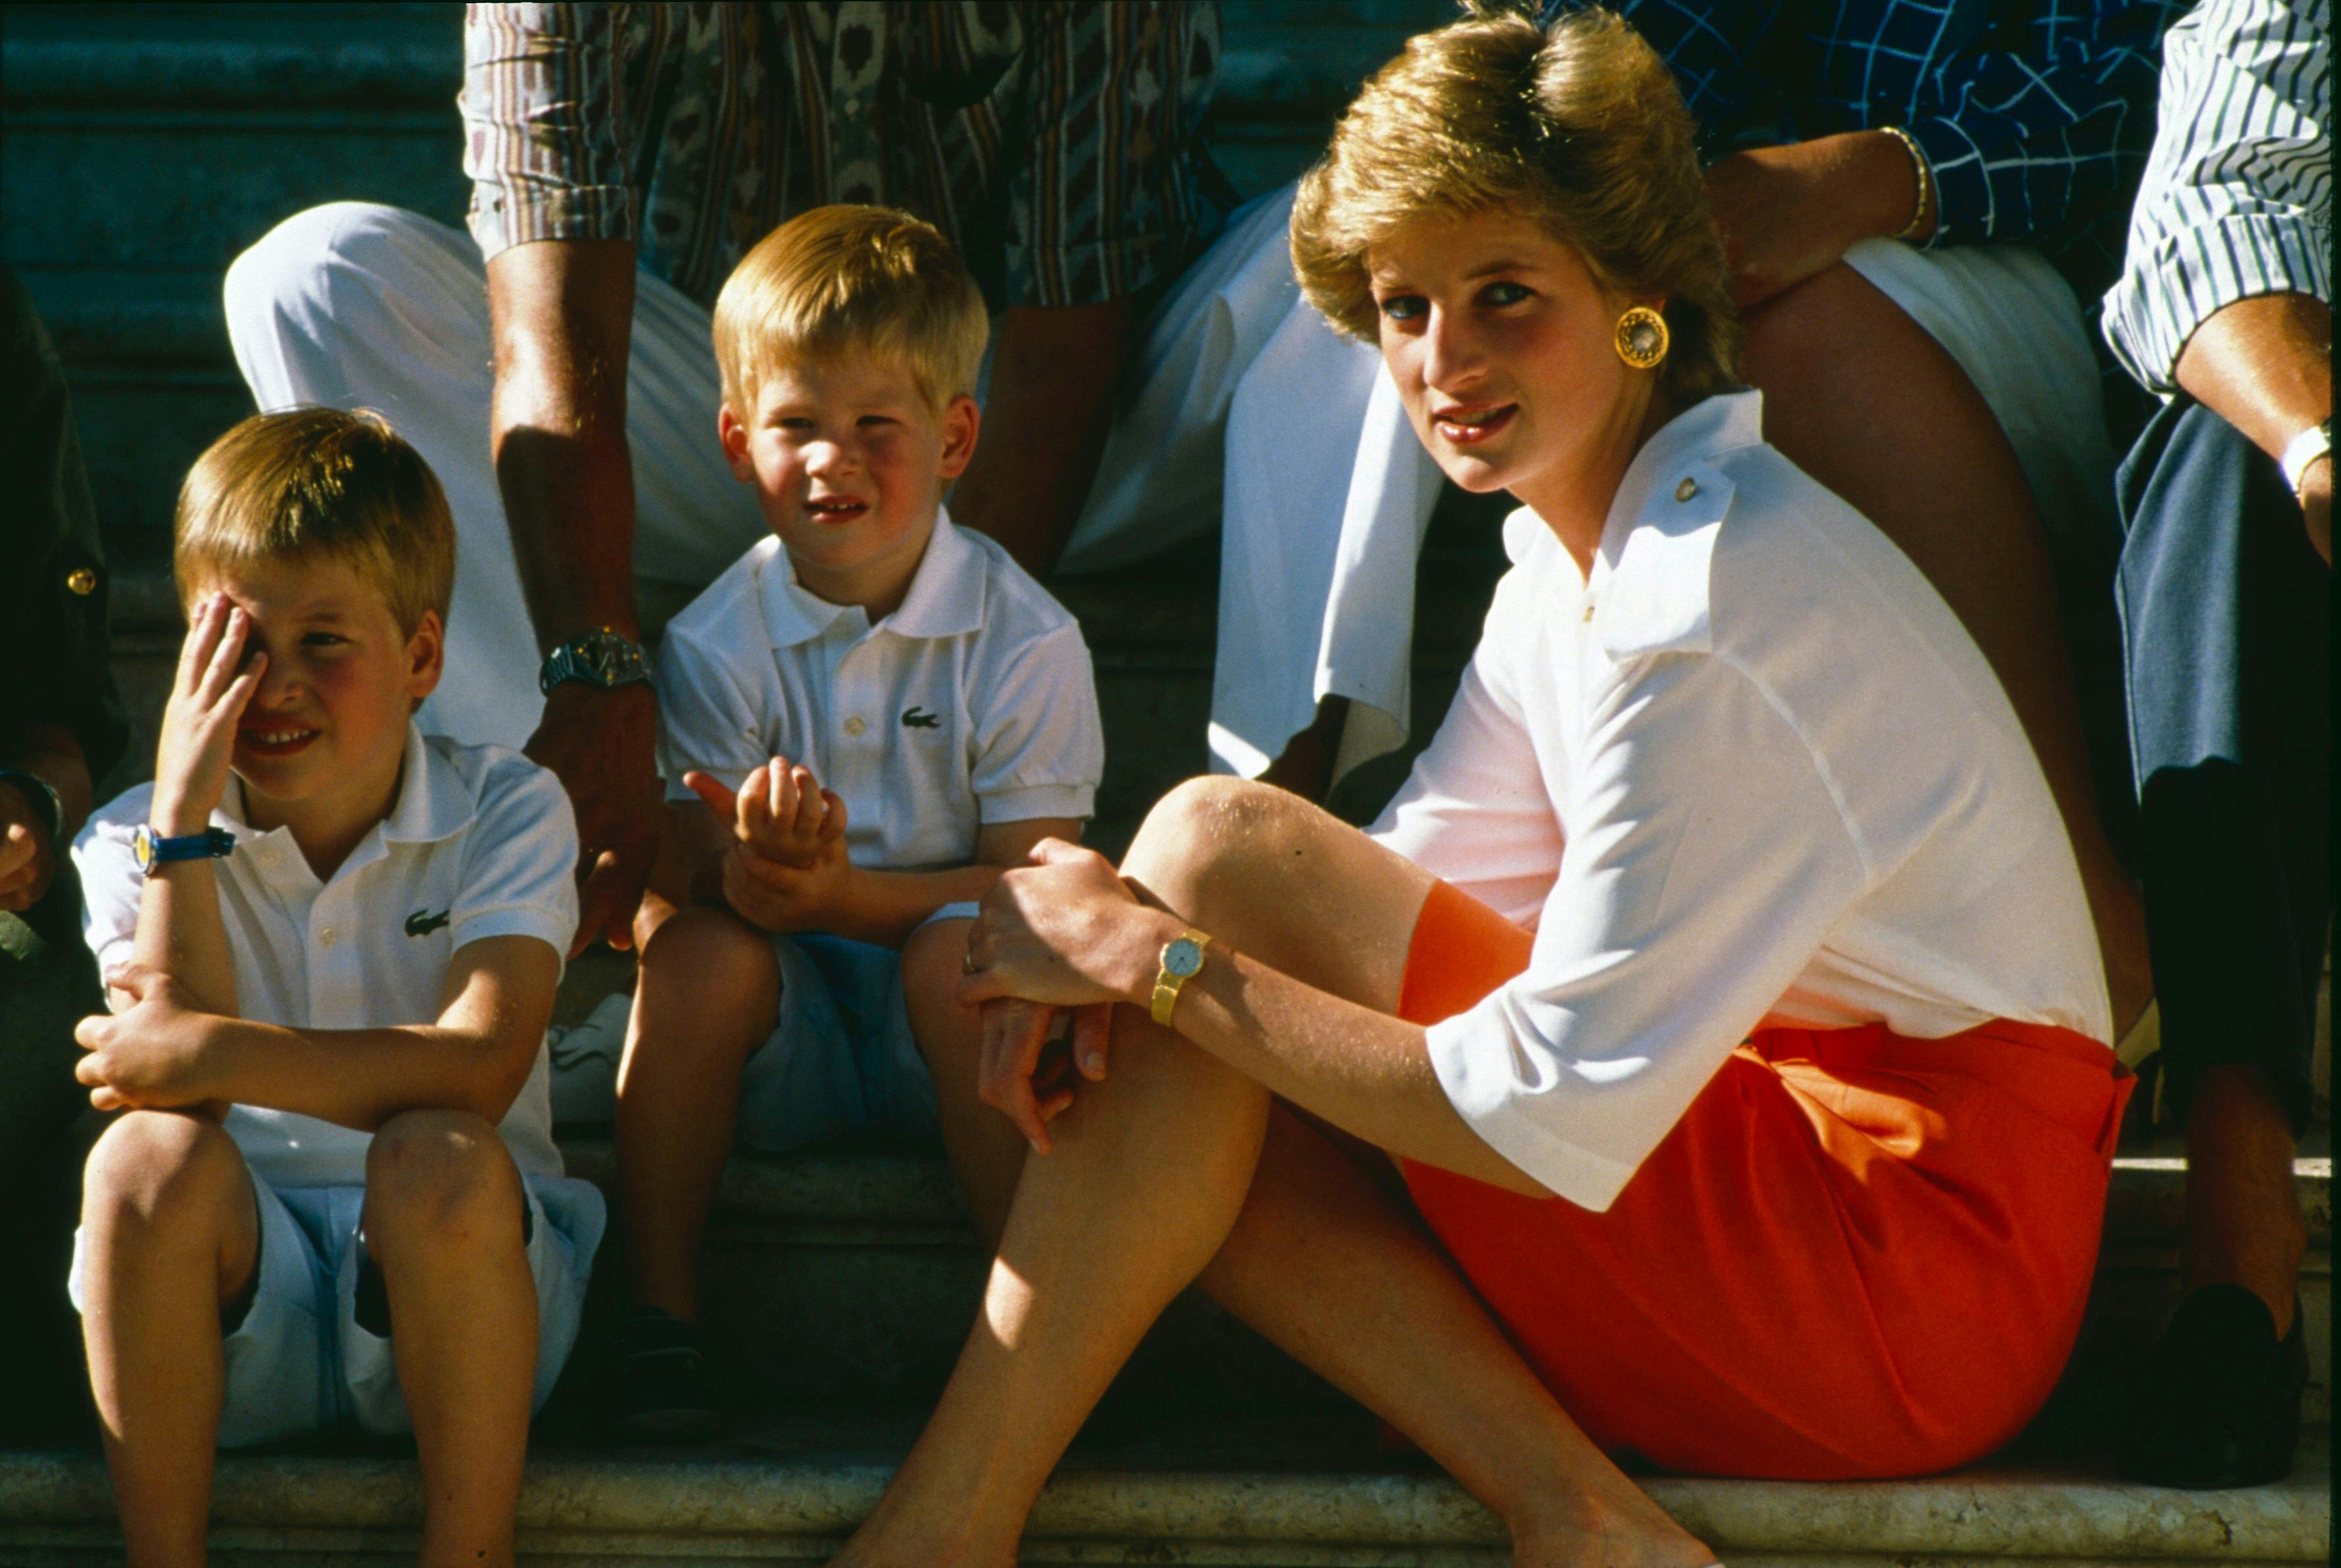 Prinsesse Diana sidder i solskinnet med sine sønner, der har matchende poloer på. 